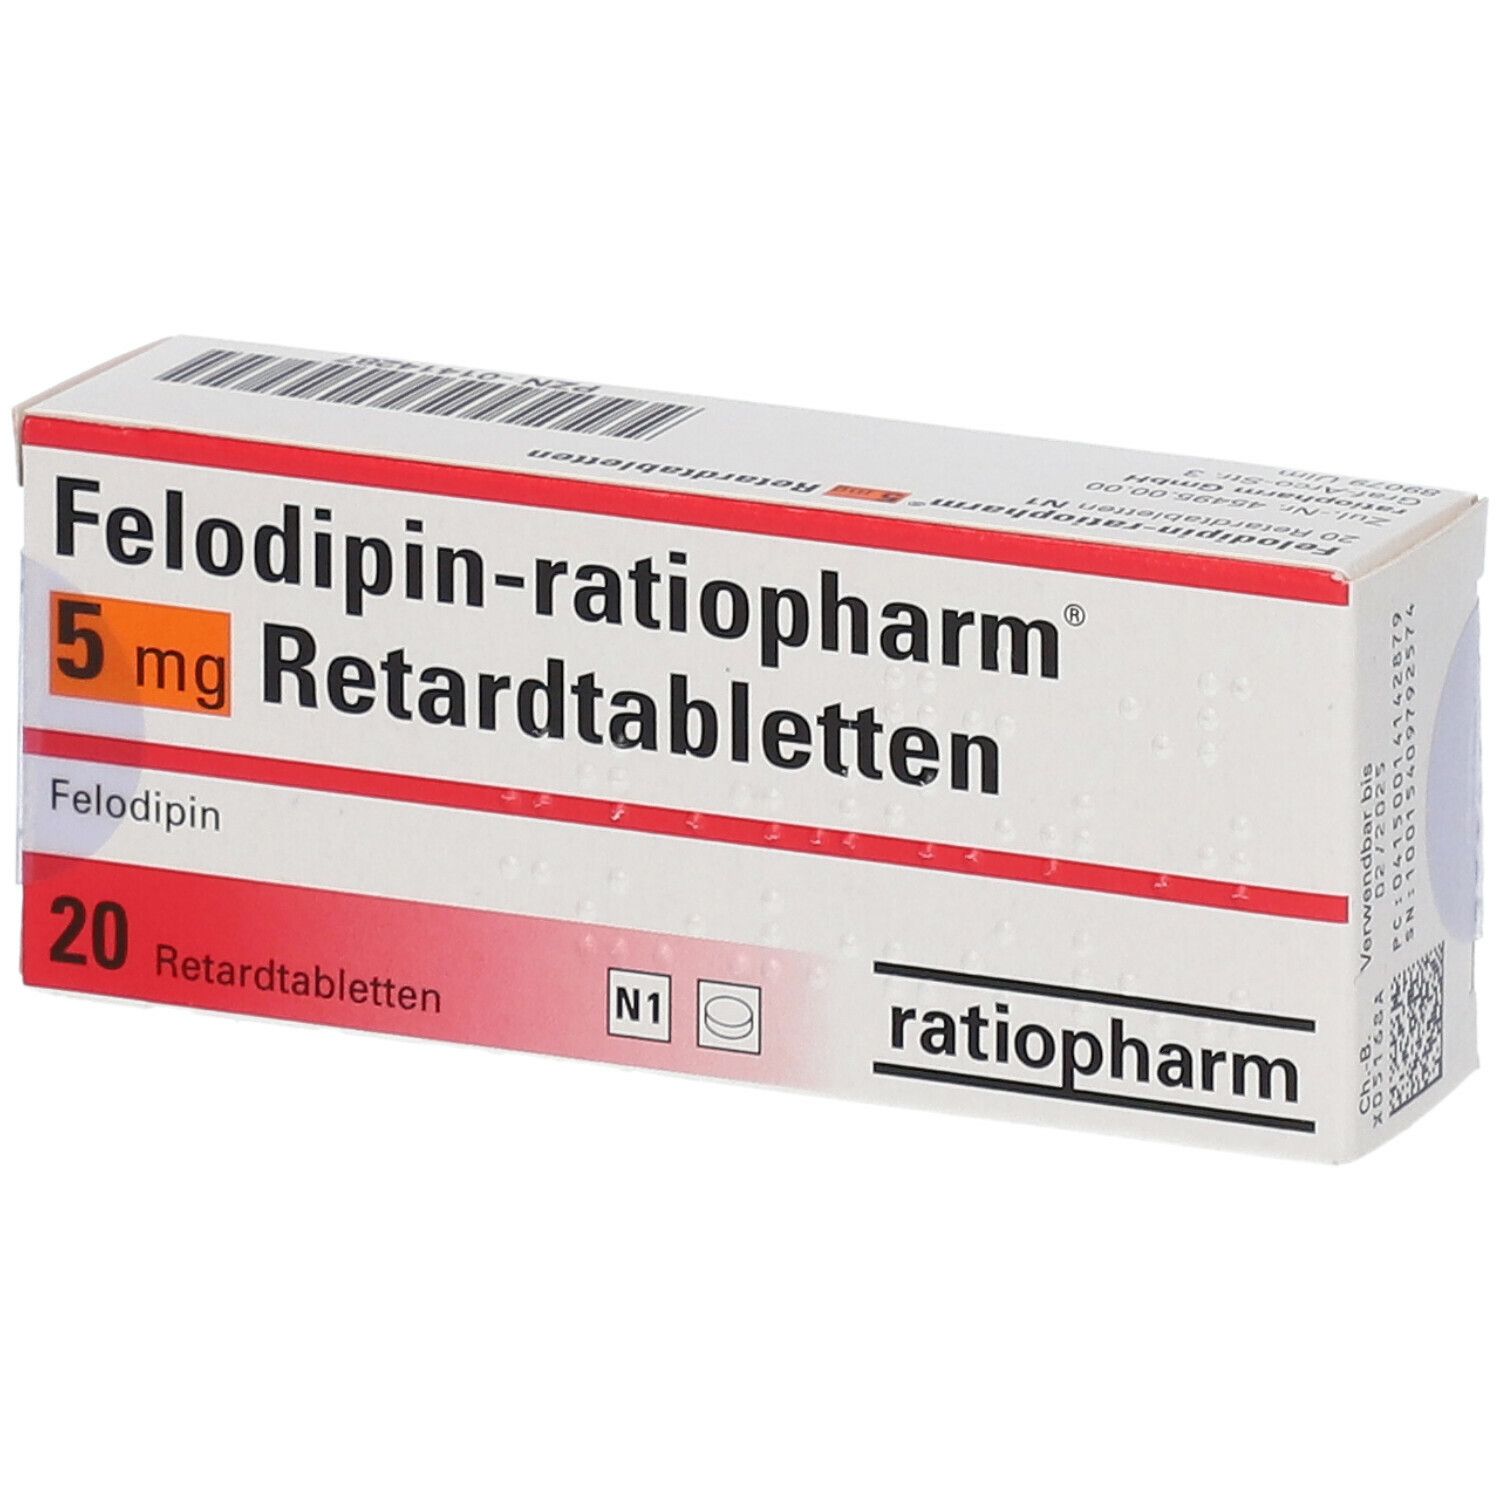 Felodipin-ratiopharm® 5 mg